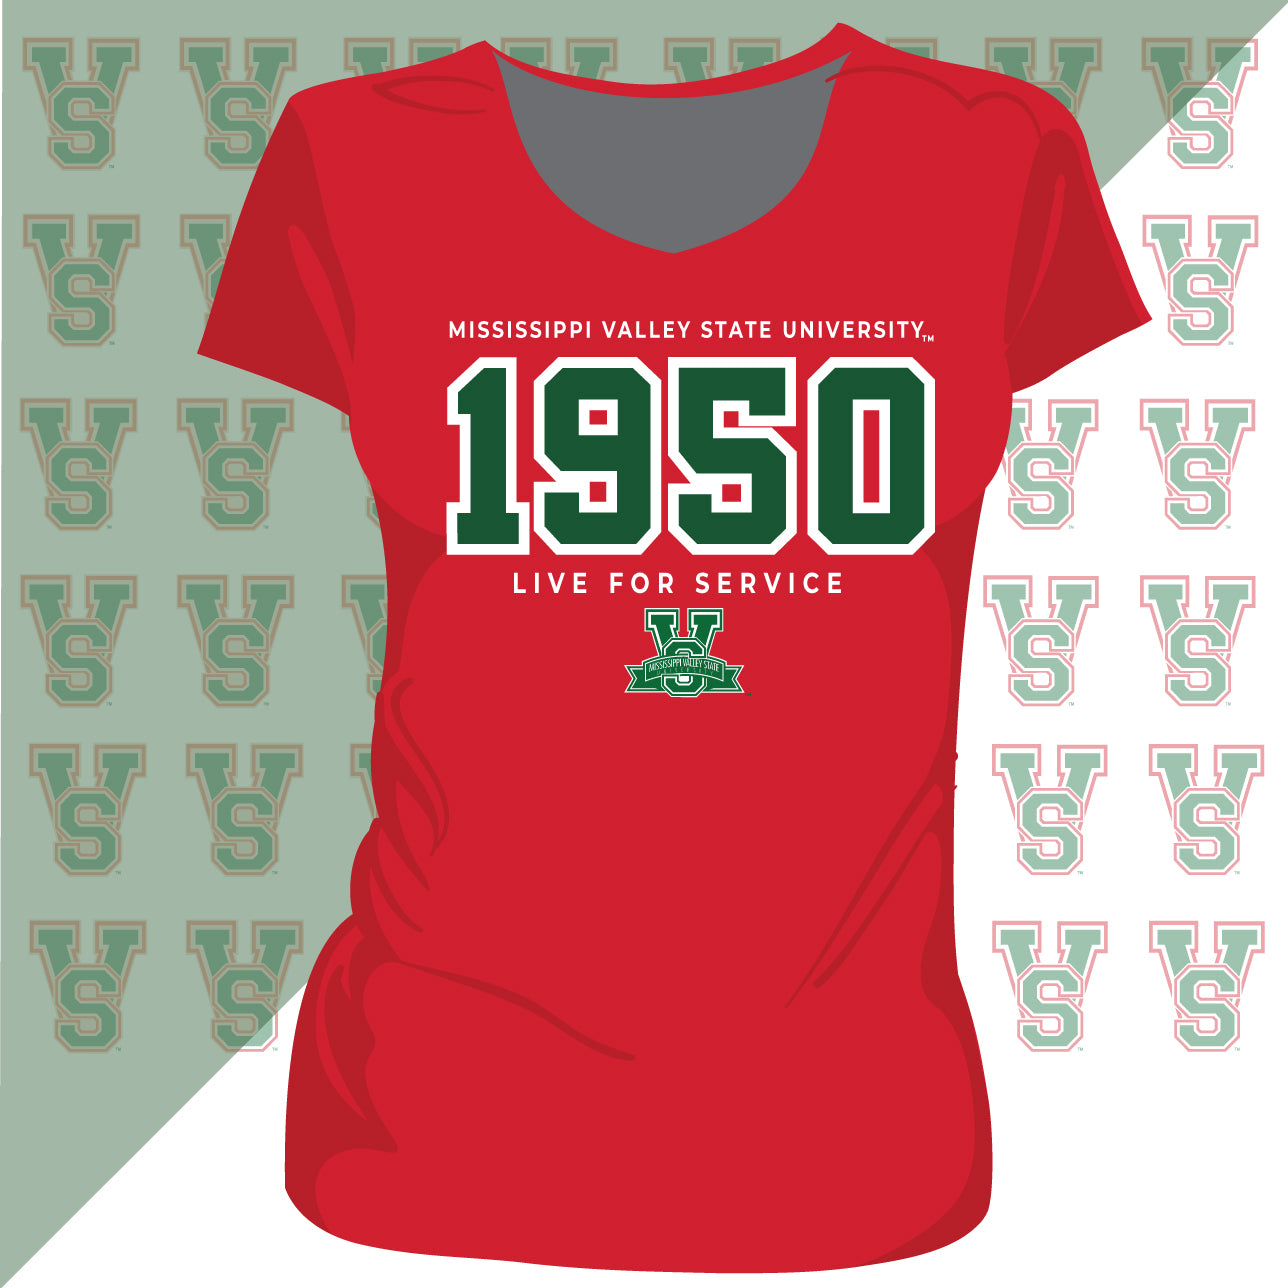 MVSU | EST. 1950 RED Ladies Tees (Z)